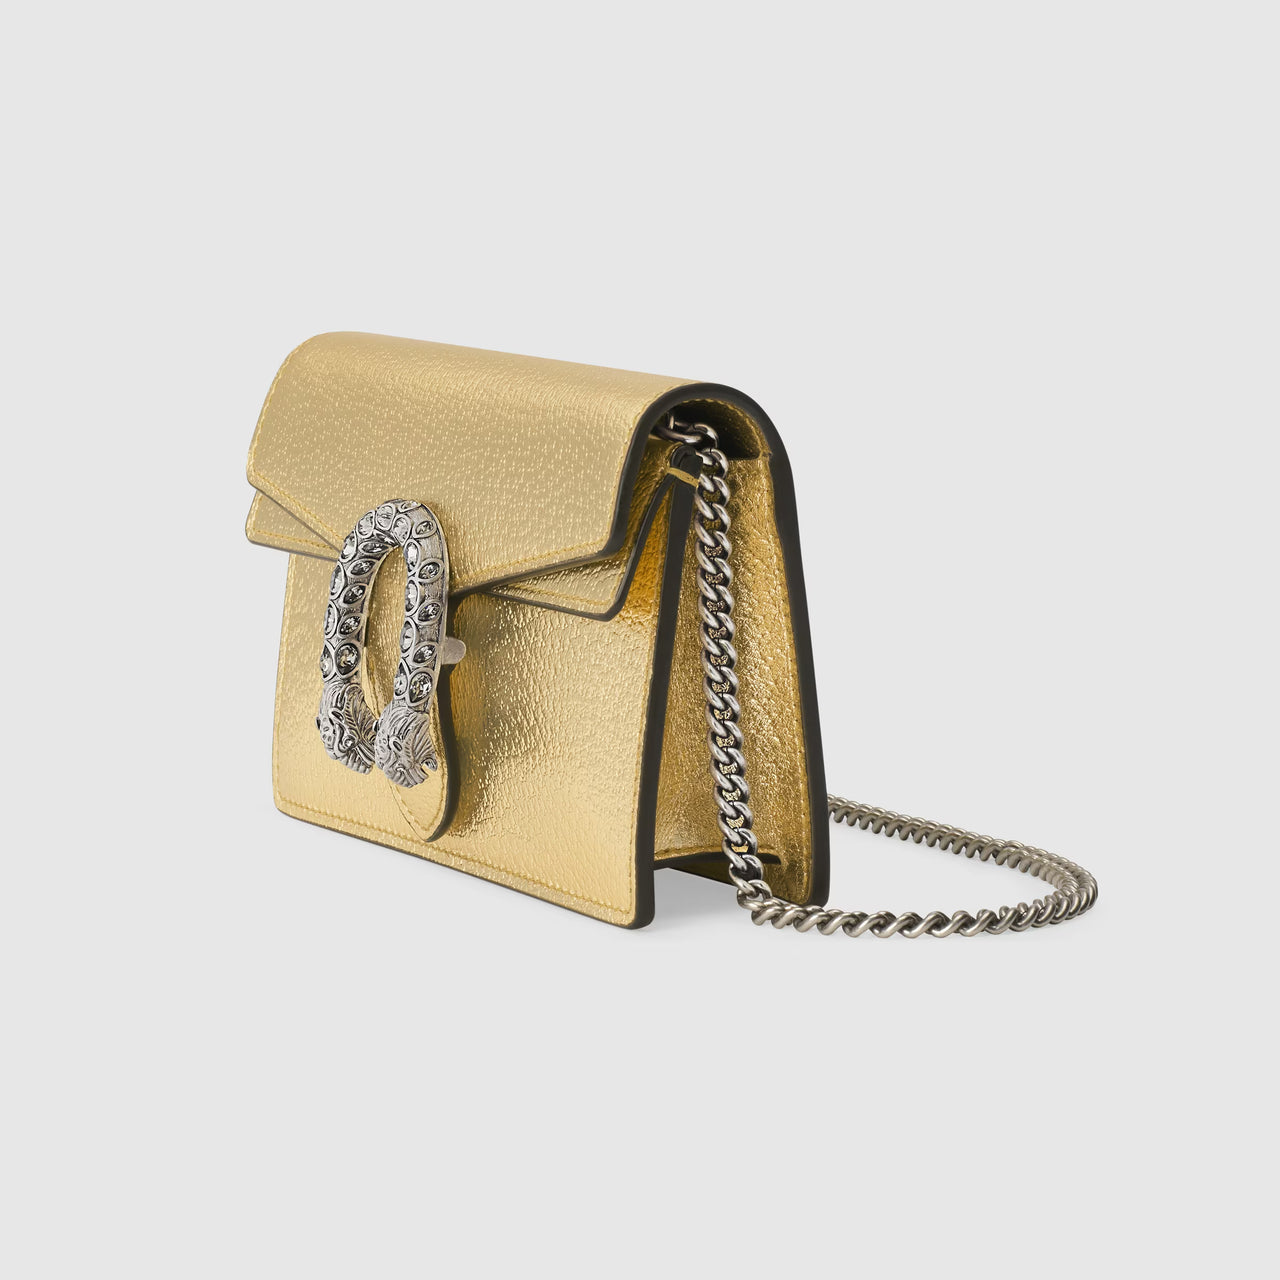 Gucci Dionysus Super Mini Leather Bag (Gold Lamé Leather)